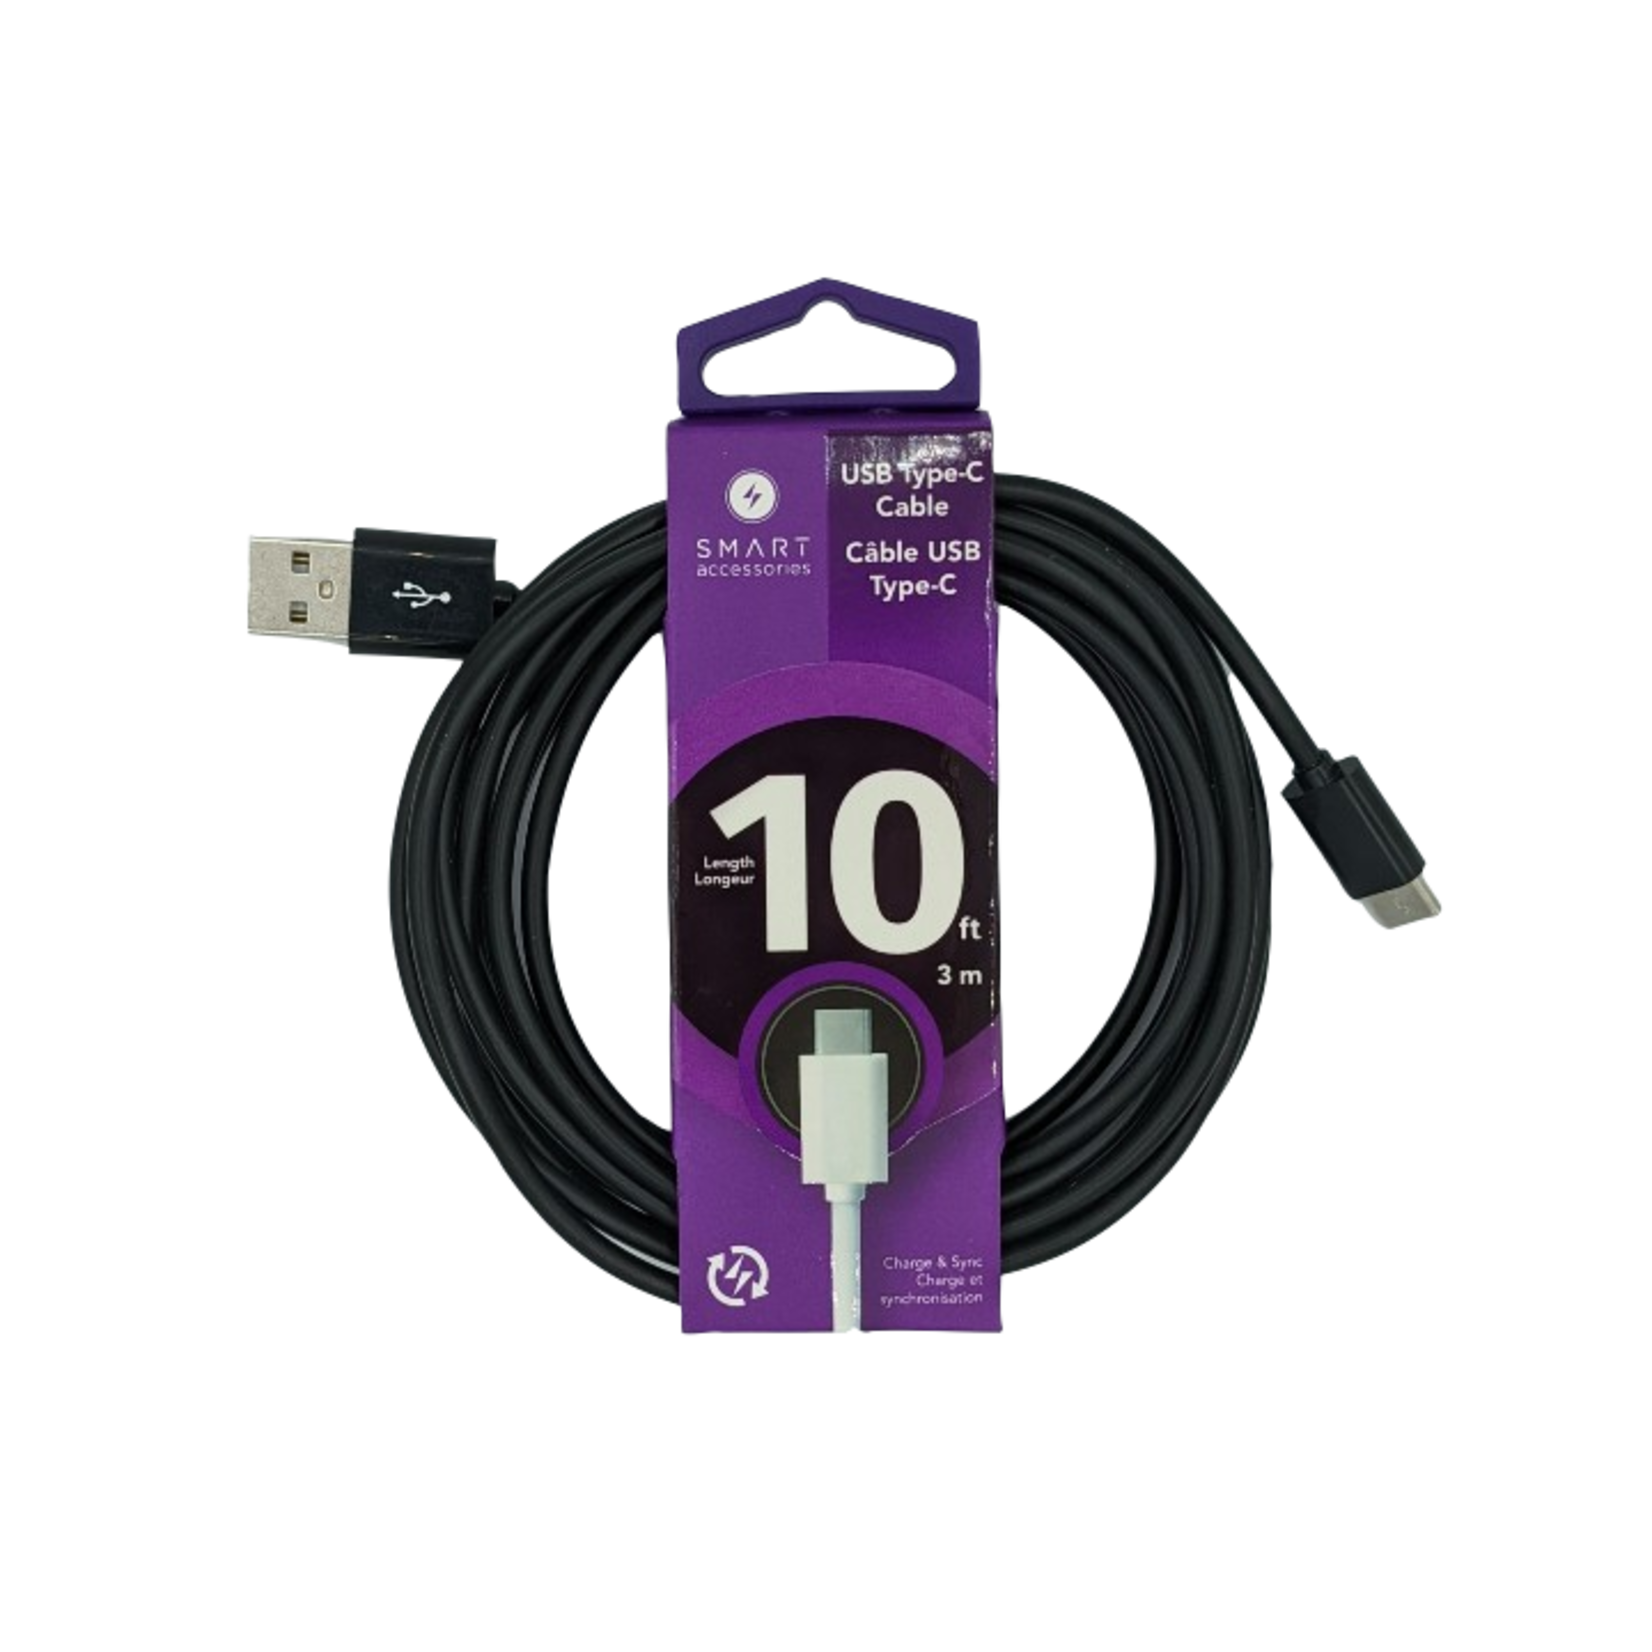 Smart 10' Cables